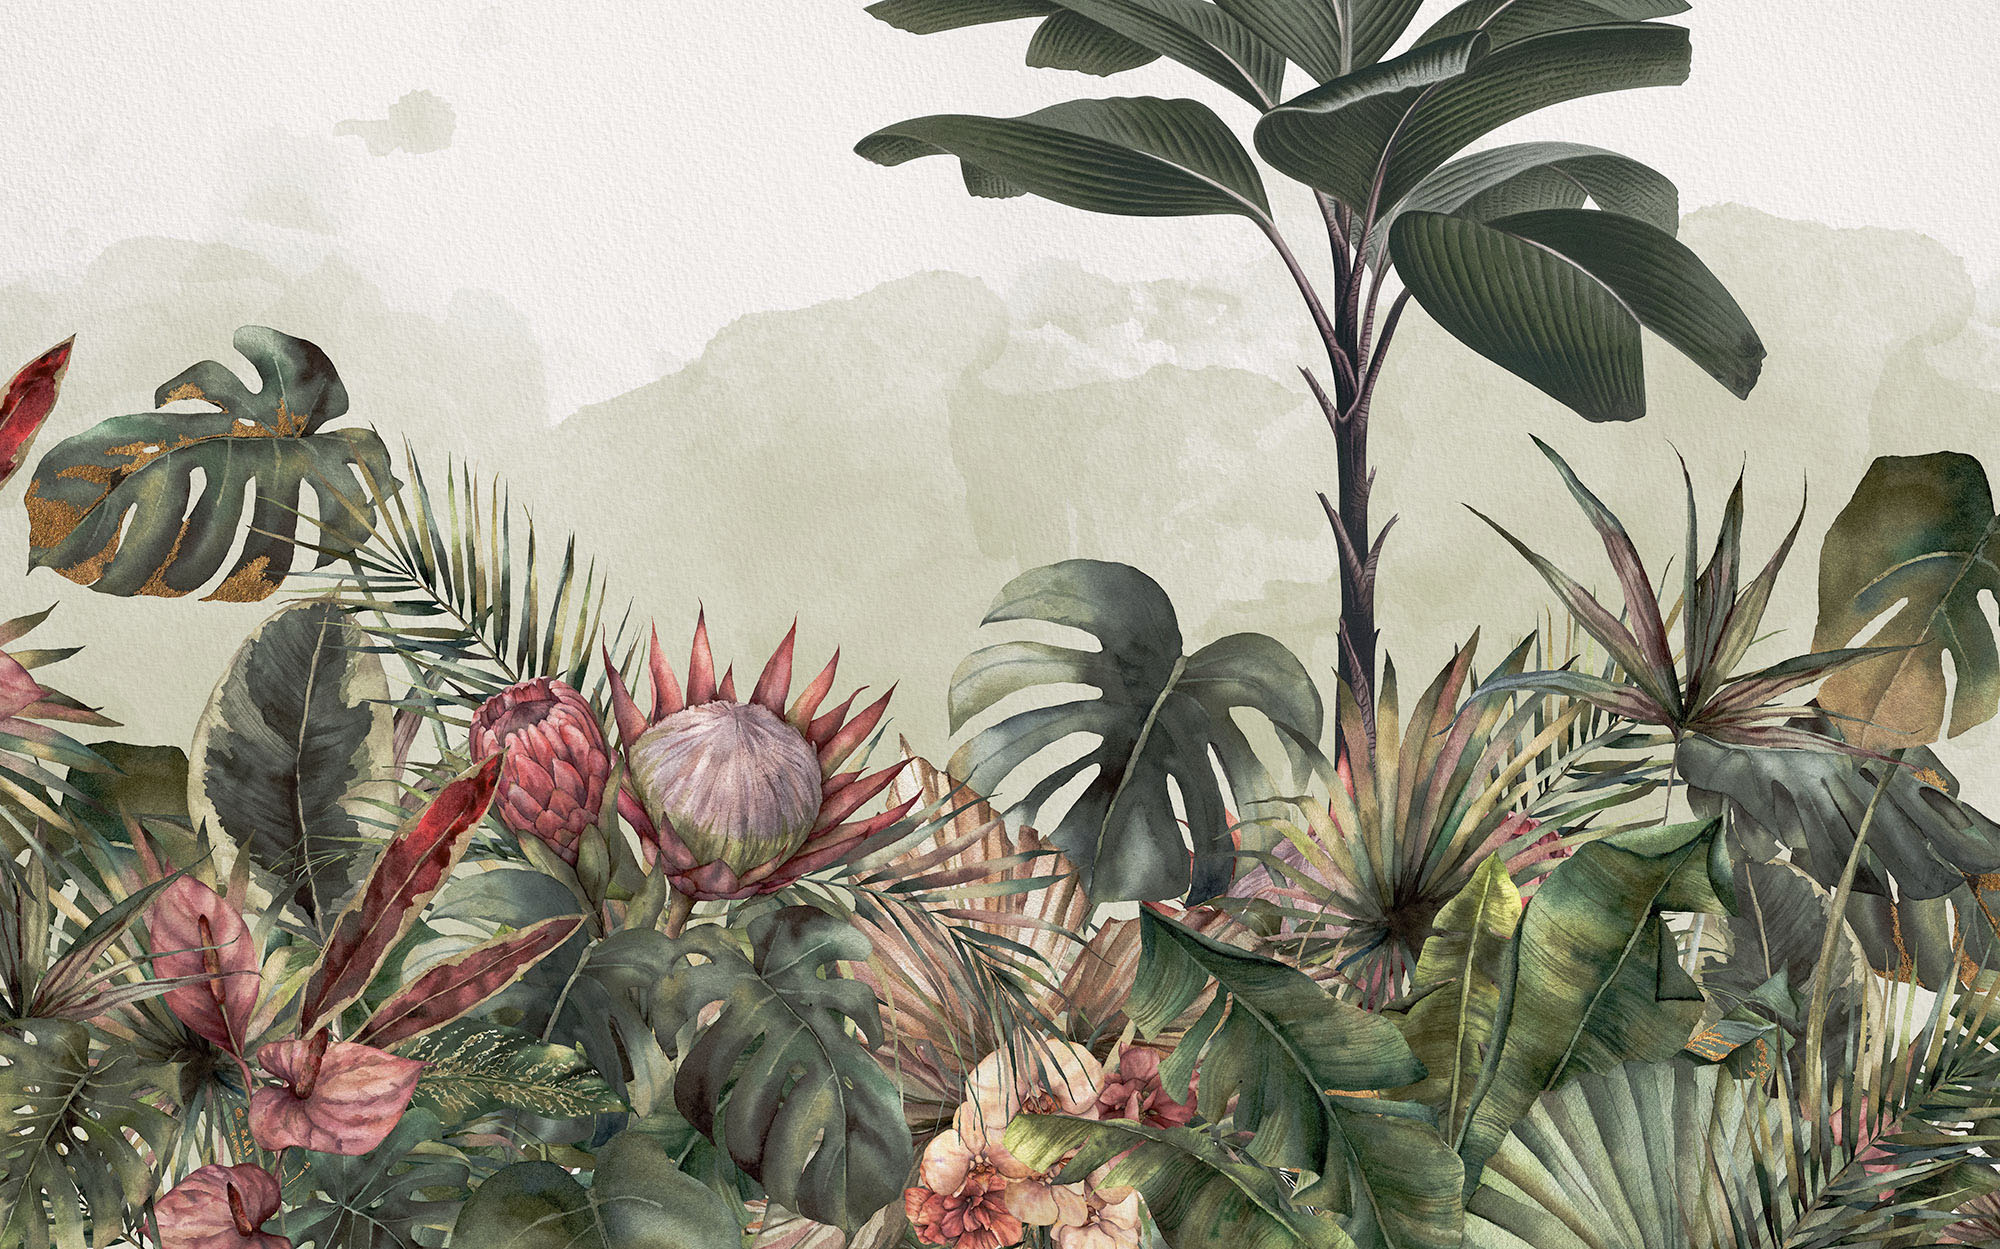 Komar Fototapete »Vlies Fototapete - Jungle Spot - Größe 400 x 250 cm«, bed günstig online kaufen